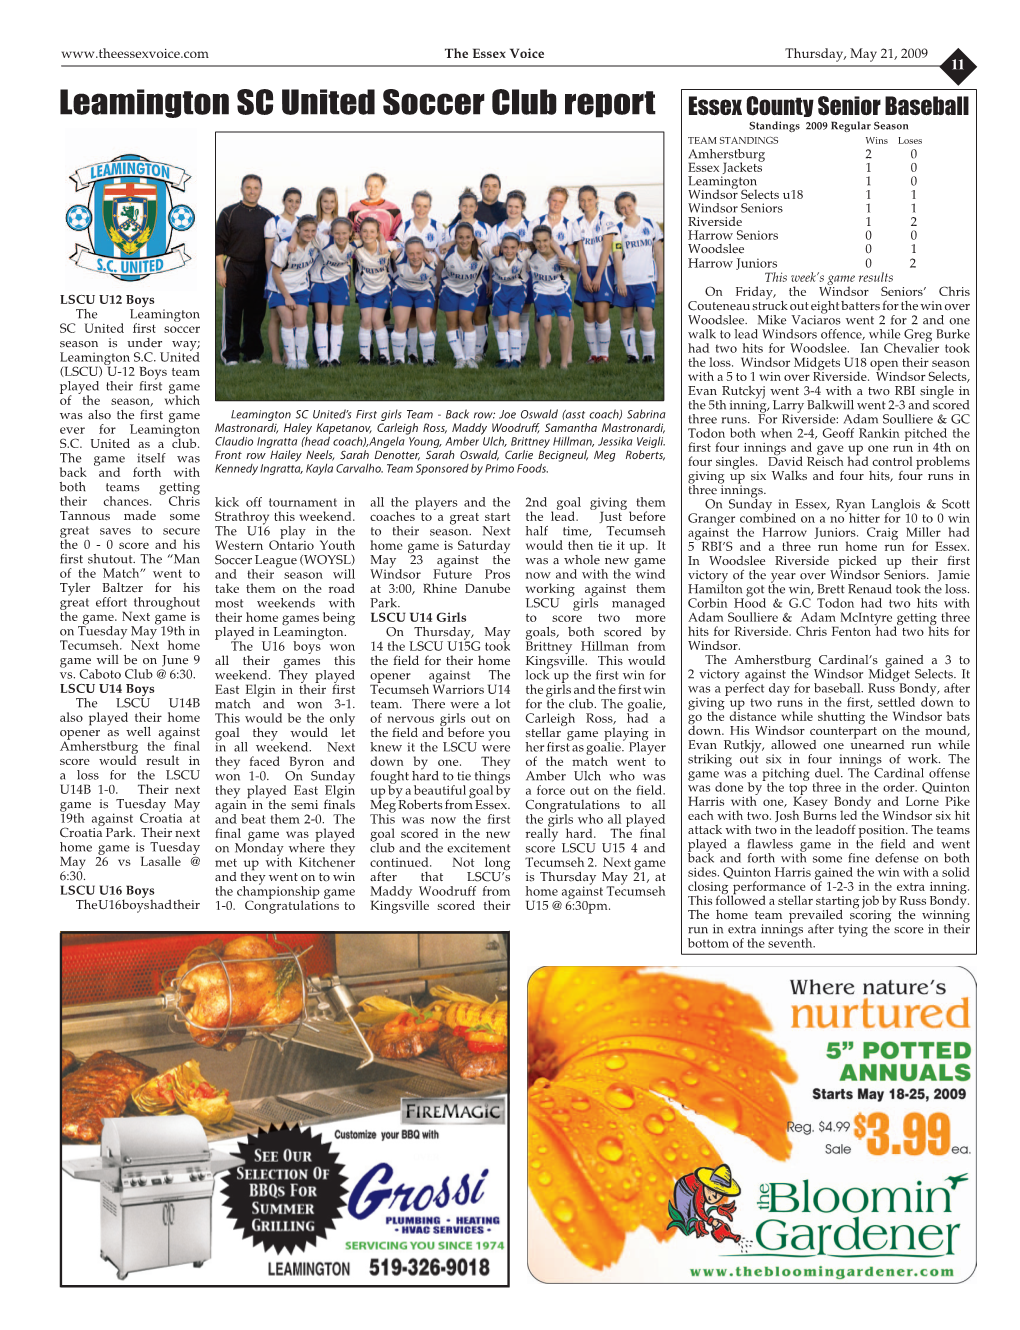 Leamington SC United Soccer Club Report